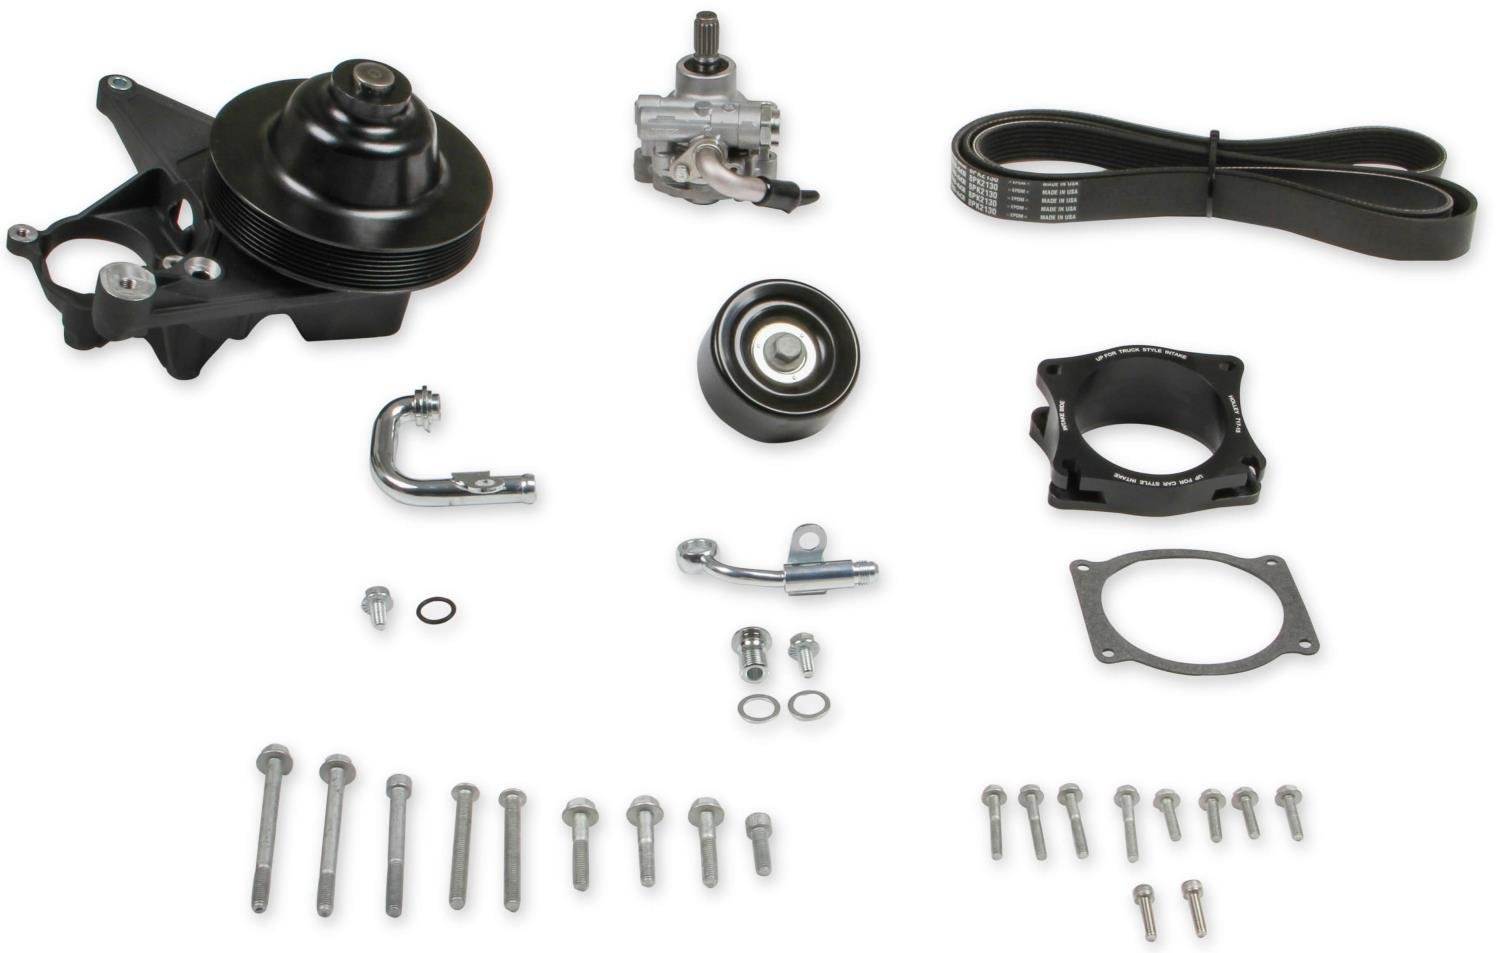 Retro-Fit Hydraulic Power Steering Kit for GM Gen